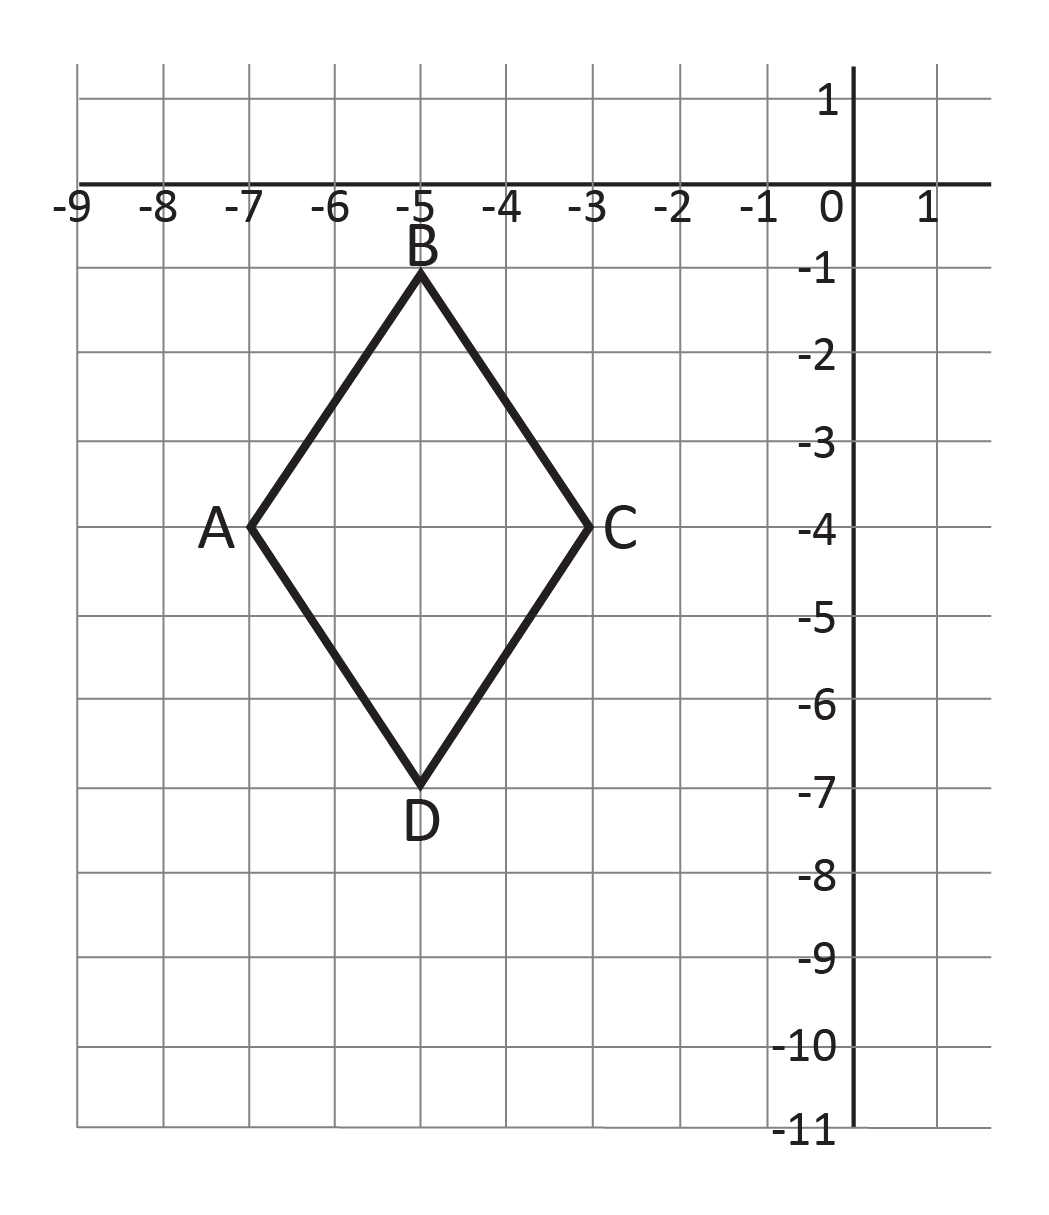 diamond ABCD in the third quadrant